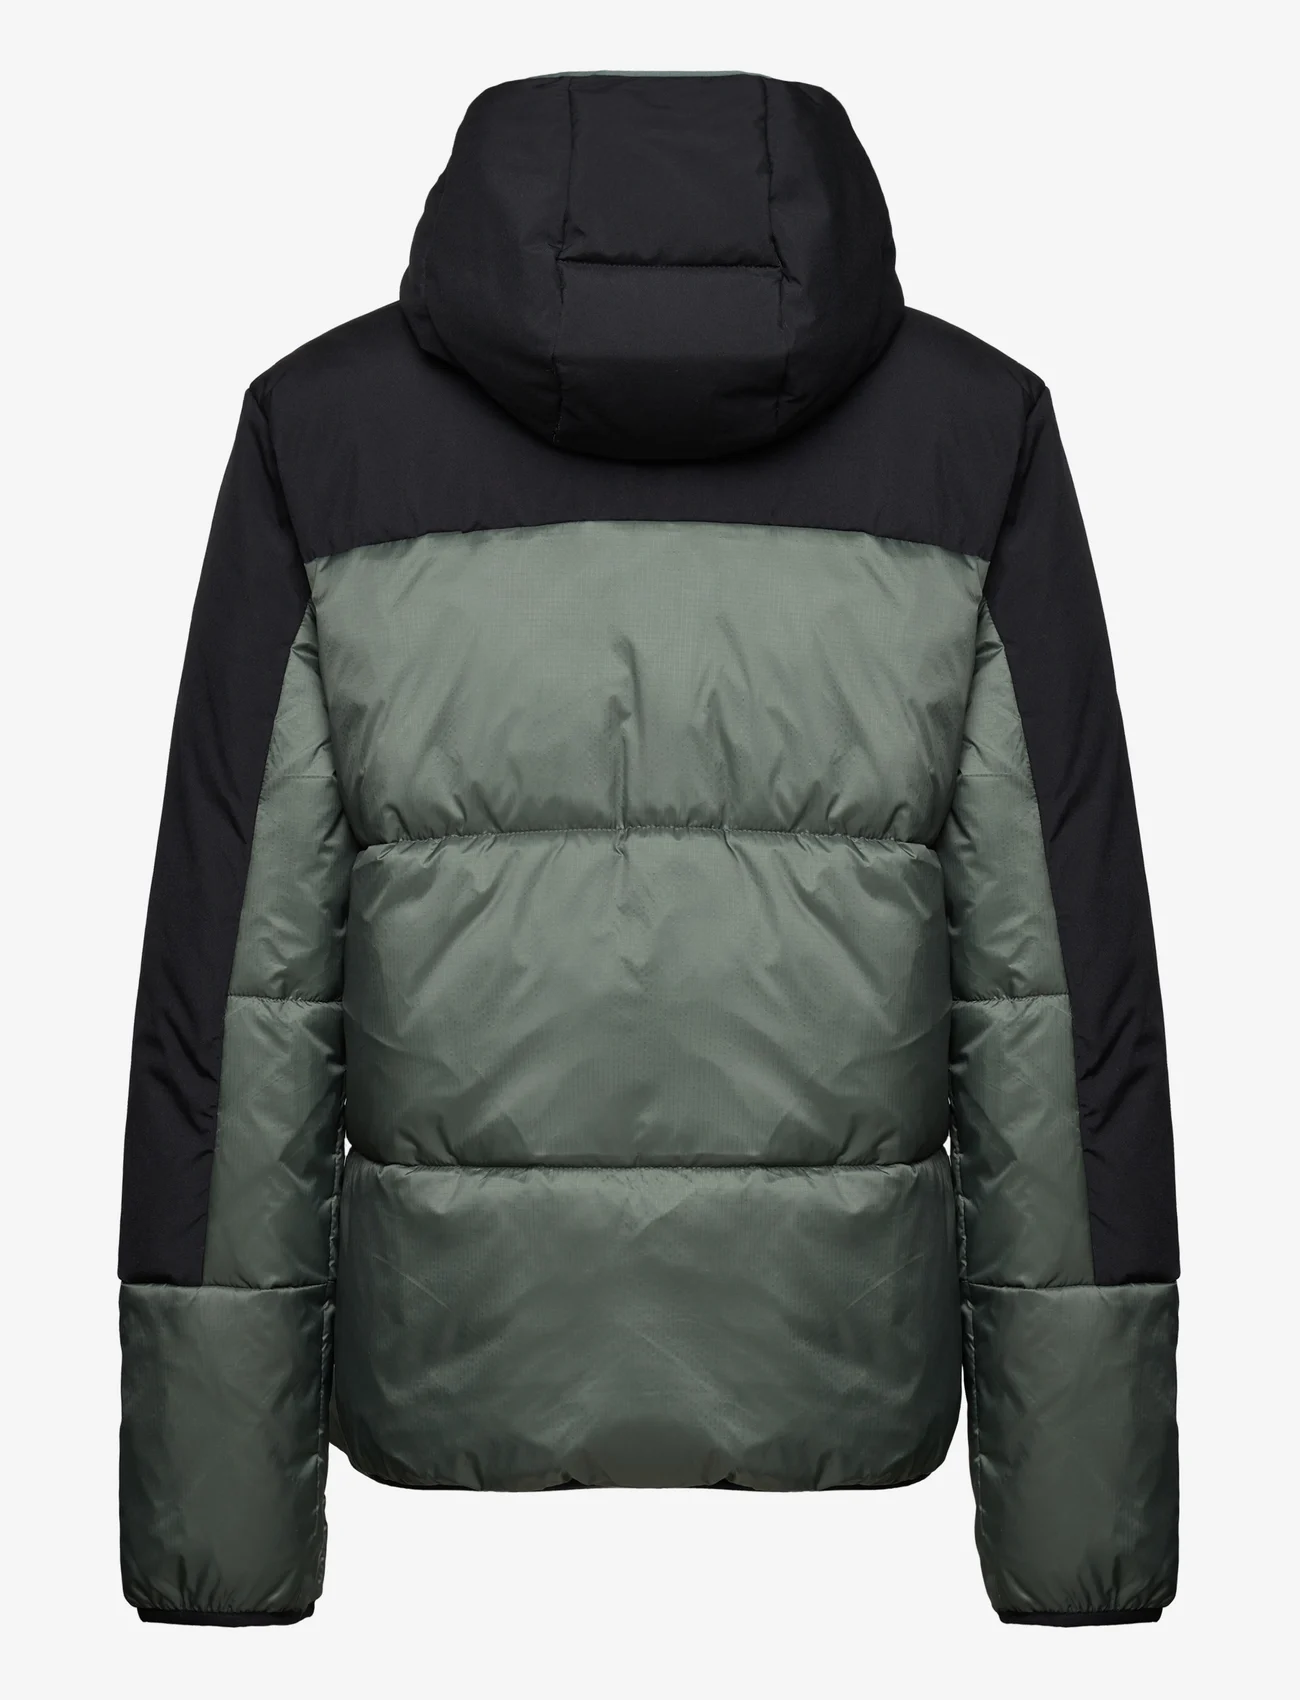 Champion - Hooded Jacket - isolerede jakker - balsamo green - 1